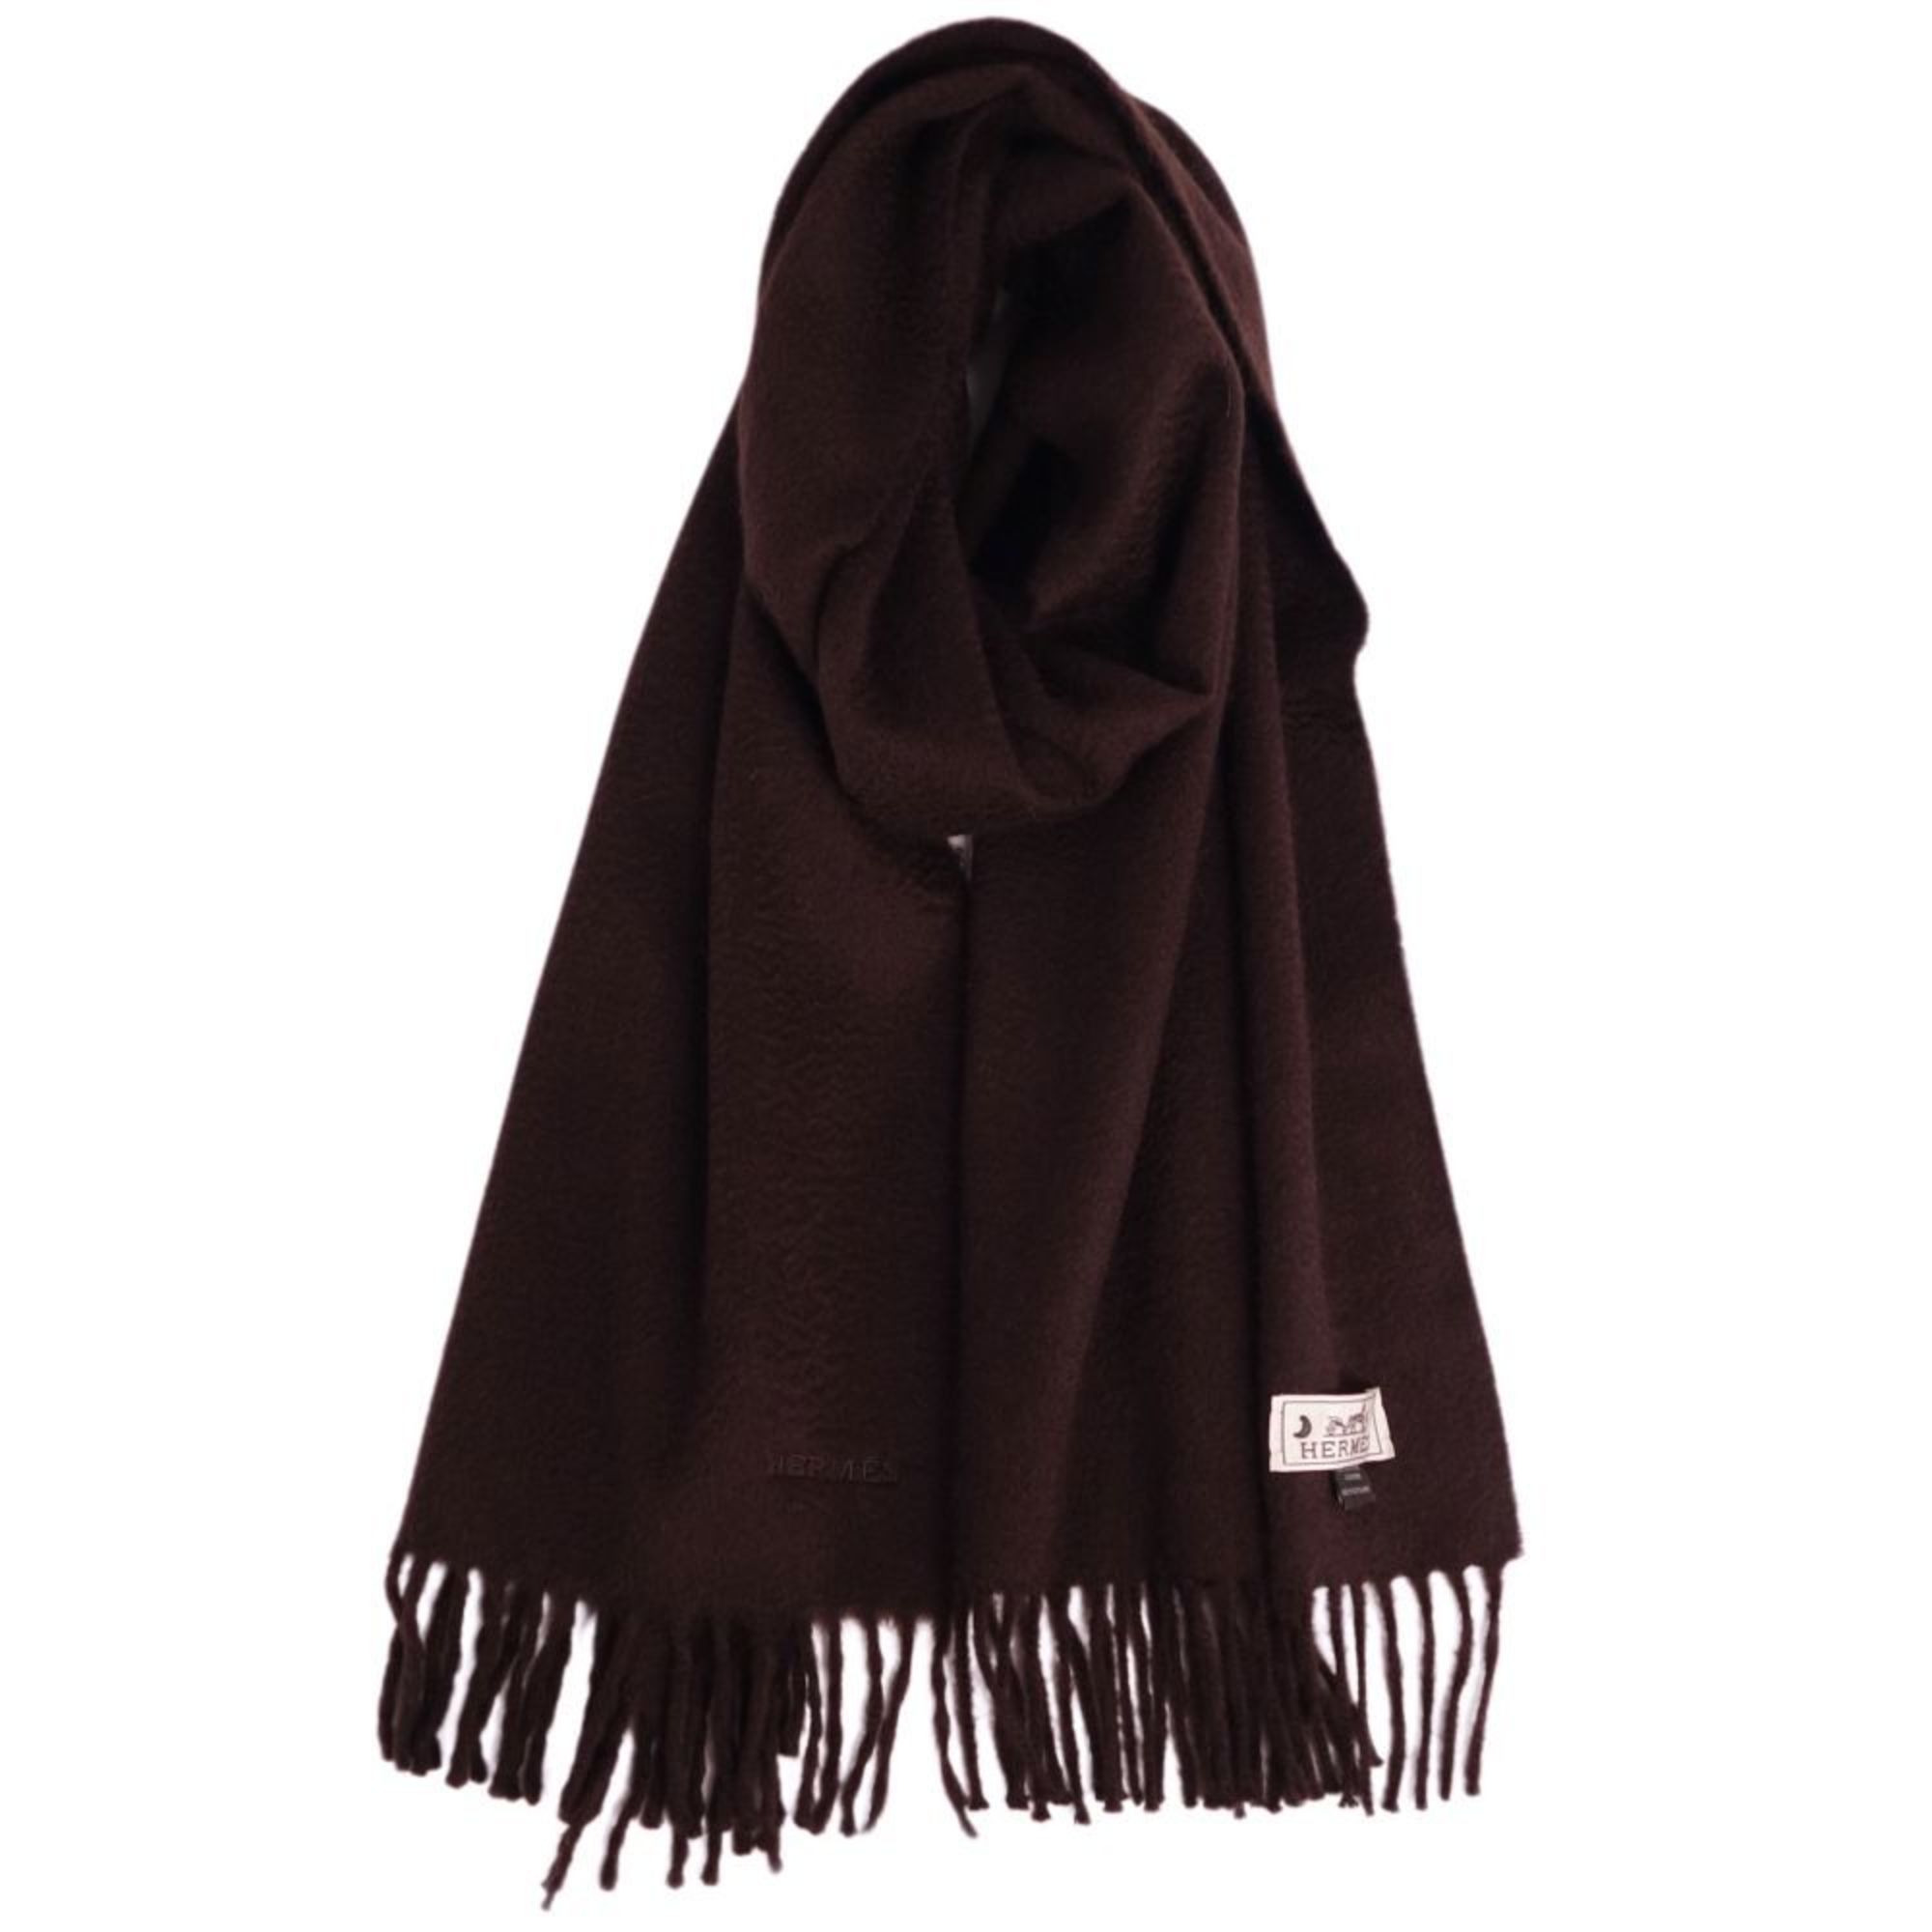 HERMES scarf 100% cashmere embroidery men's women's dark brown